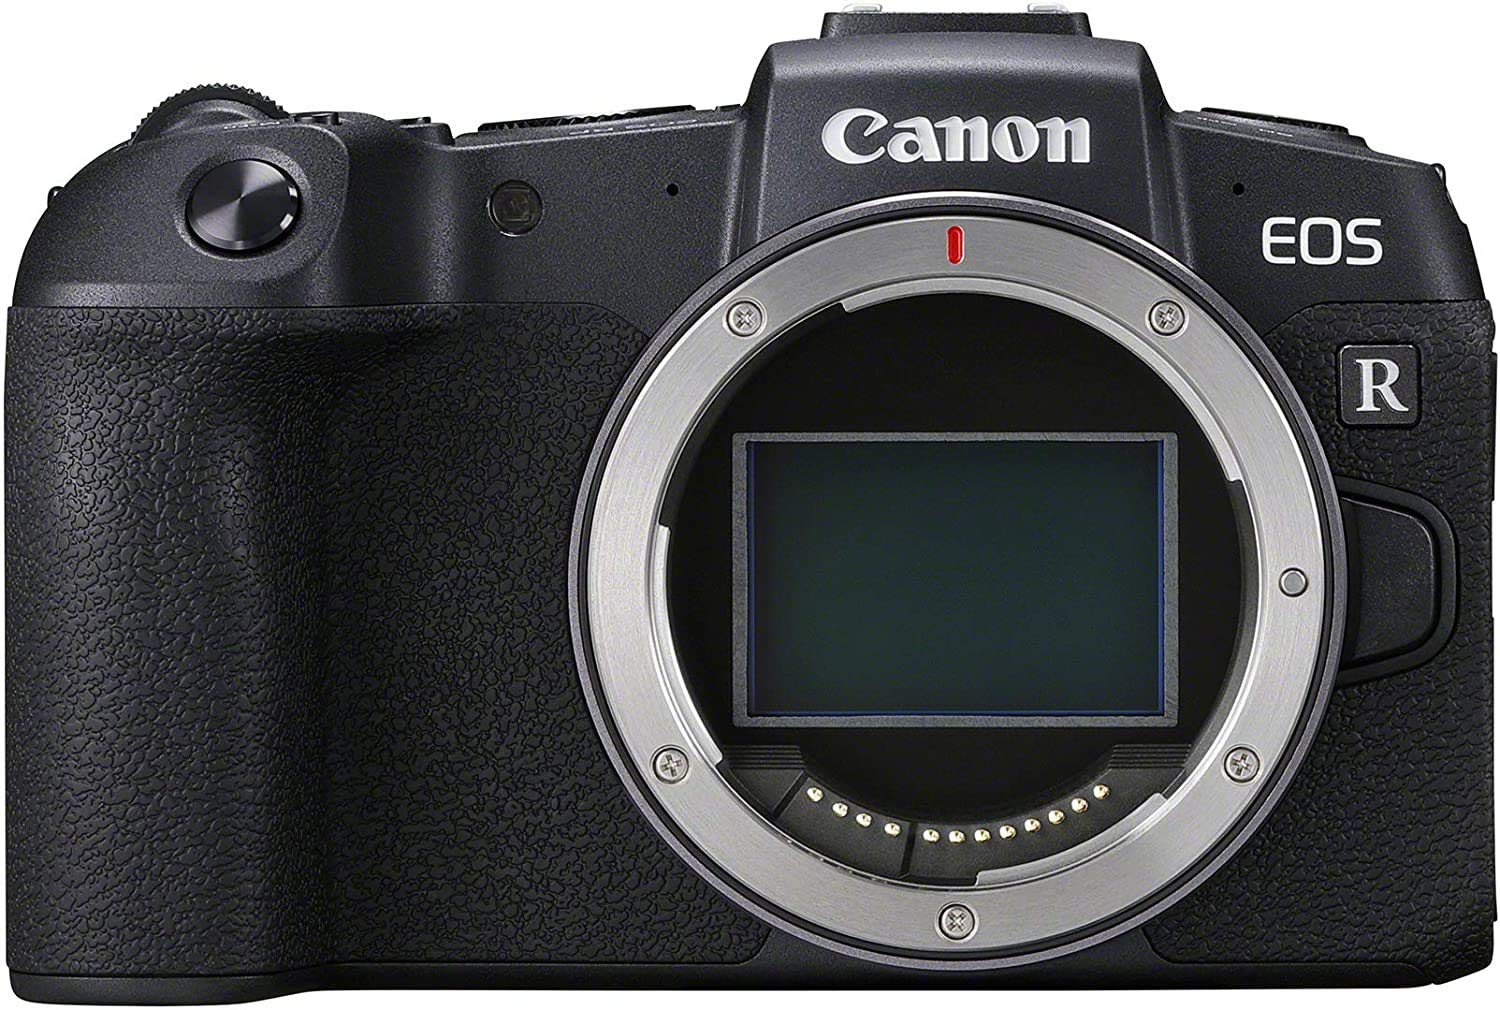 Canon EOS RP Systemkamera - mit Vollformat-Sensor + Adapter EF-EOS R (spiegellos, 26,2 MP, 7,5cm (3 Zoll) Clear View LCD II Display, Digic 8, 4K Video, WLAN, Bluetooth), schwarz